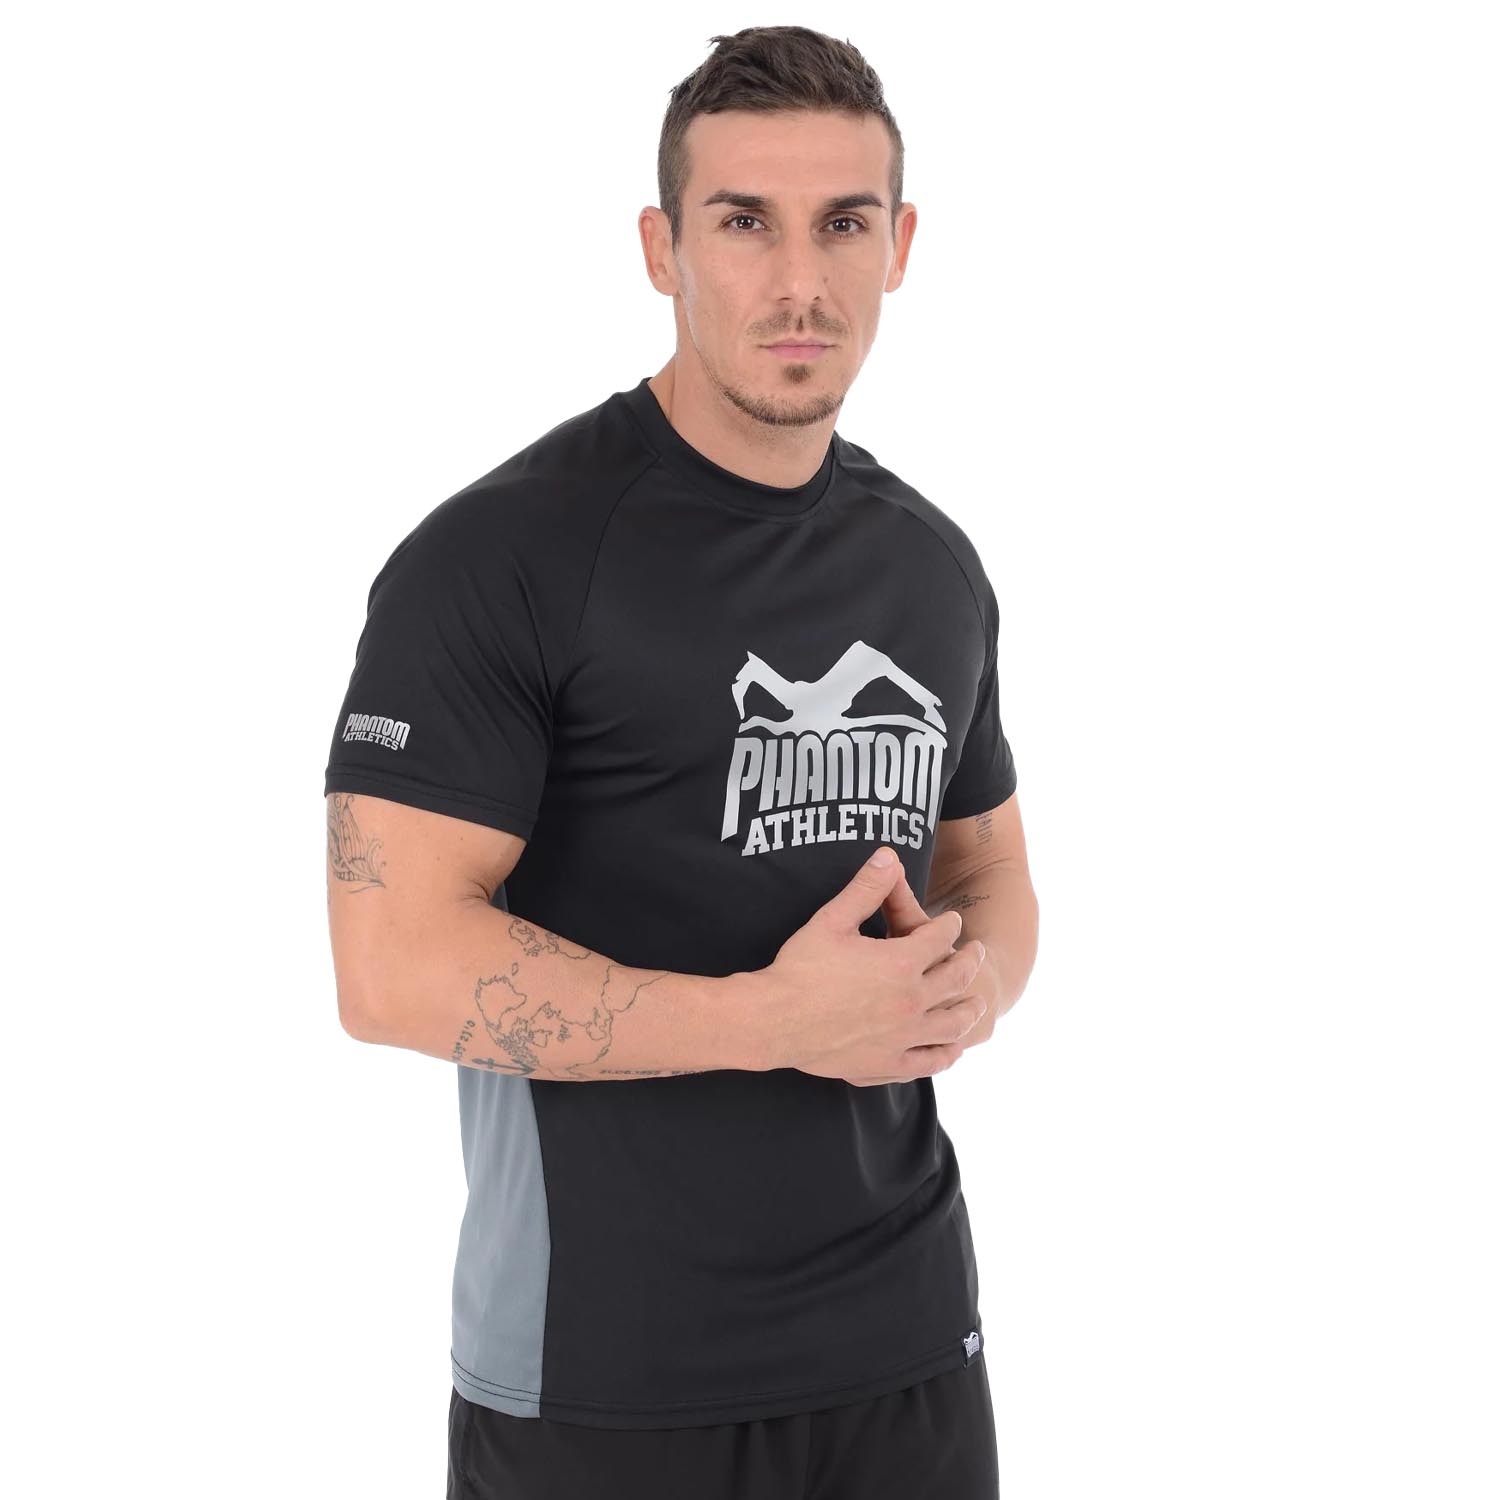 Phantom Athletics Fitness T-Shirt, Stealth, schwarz, L